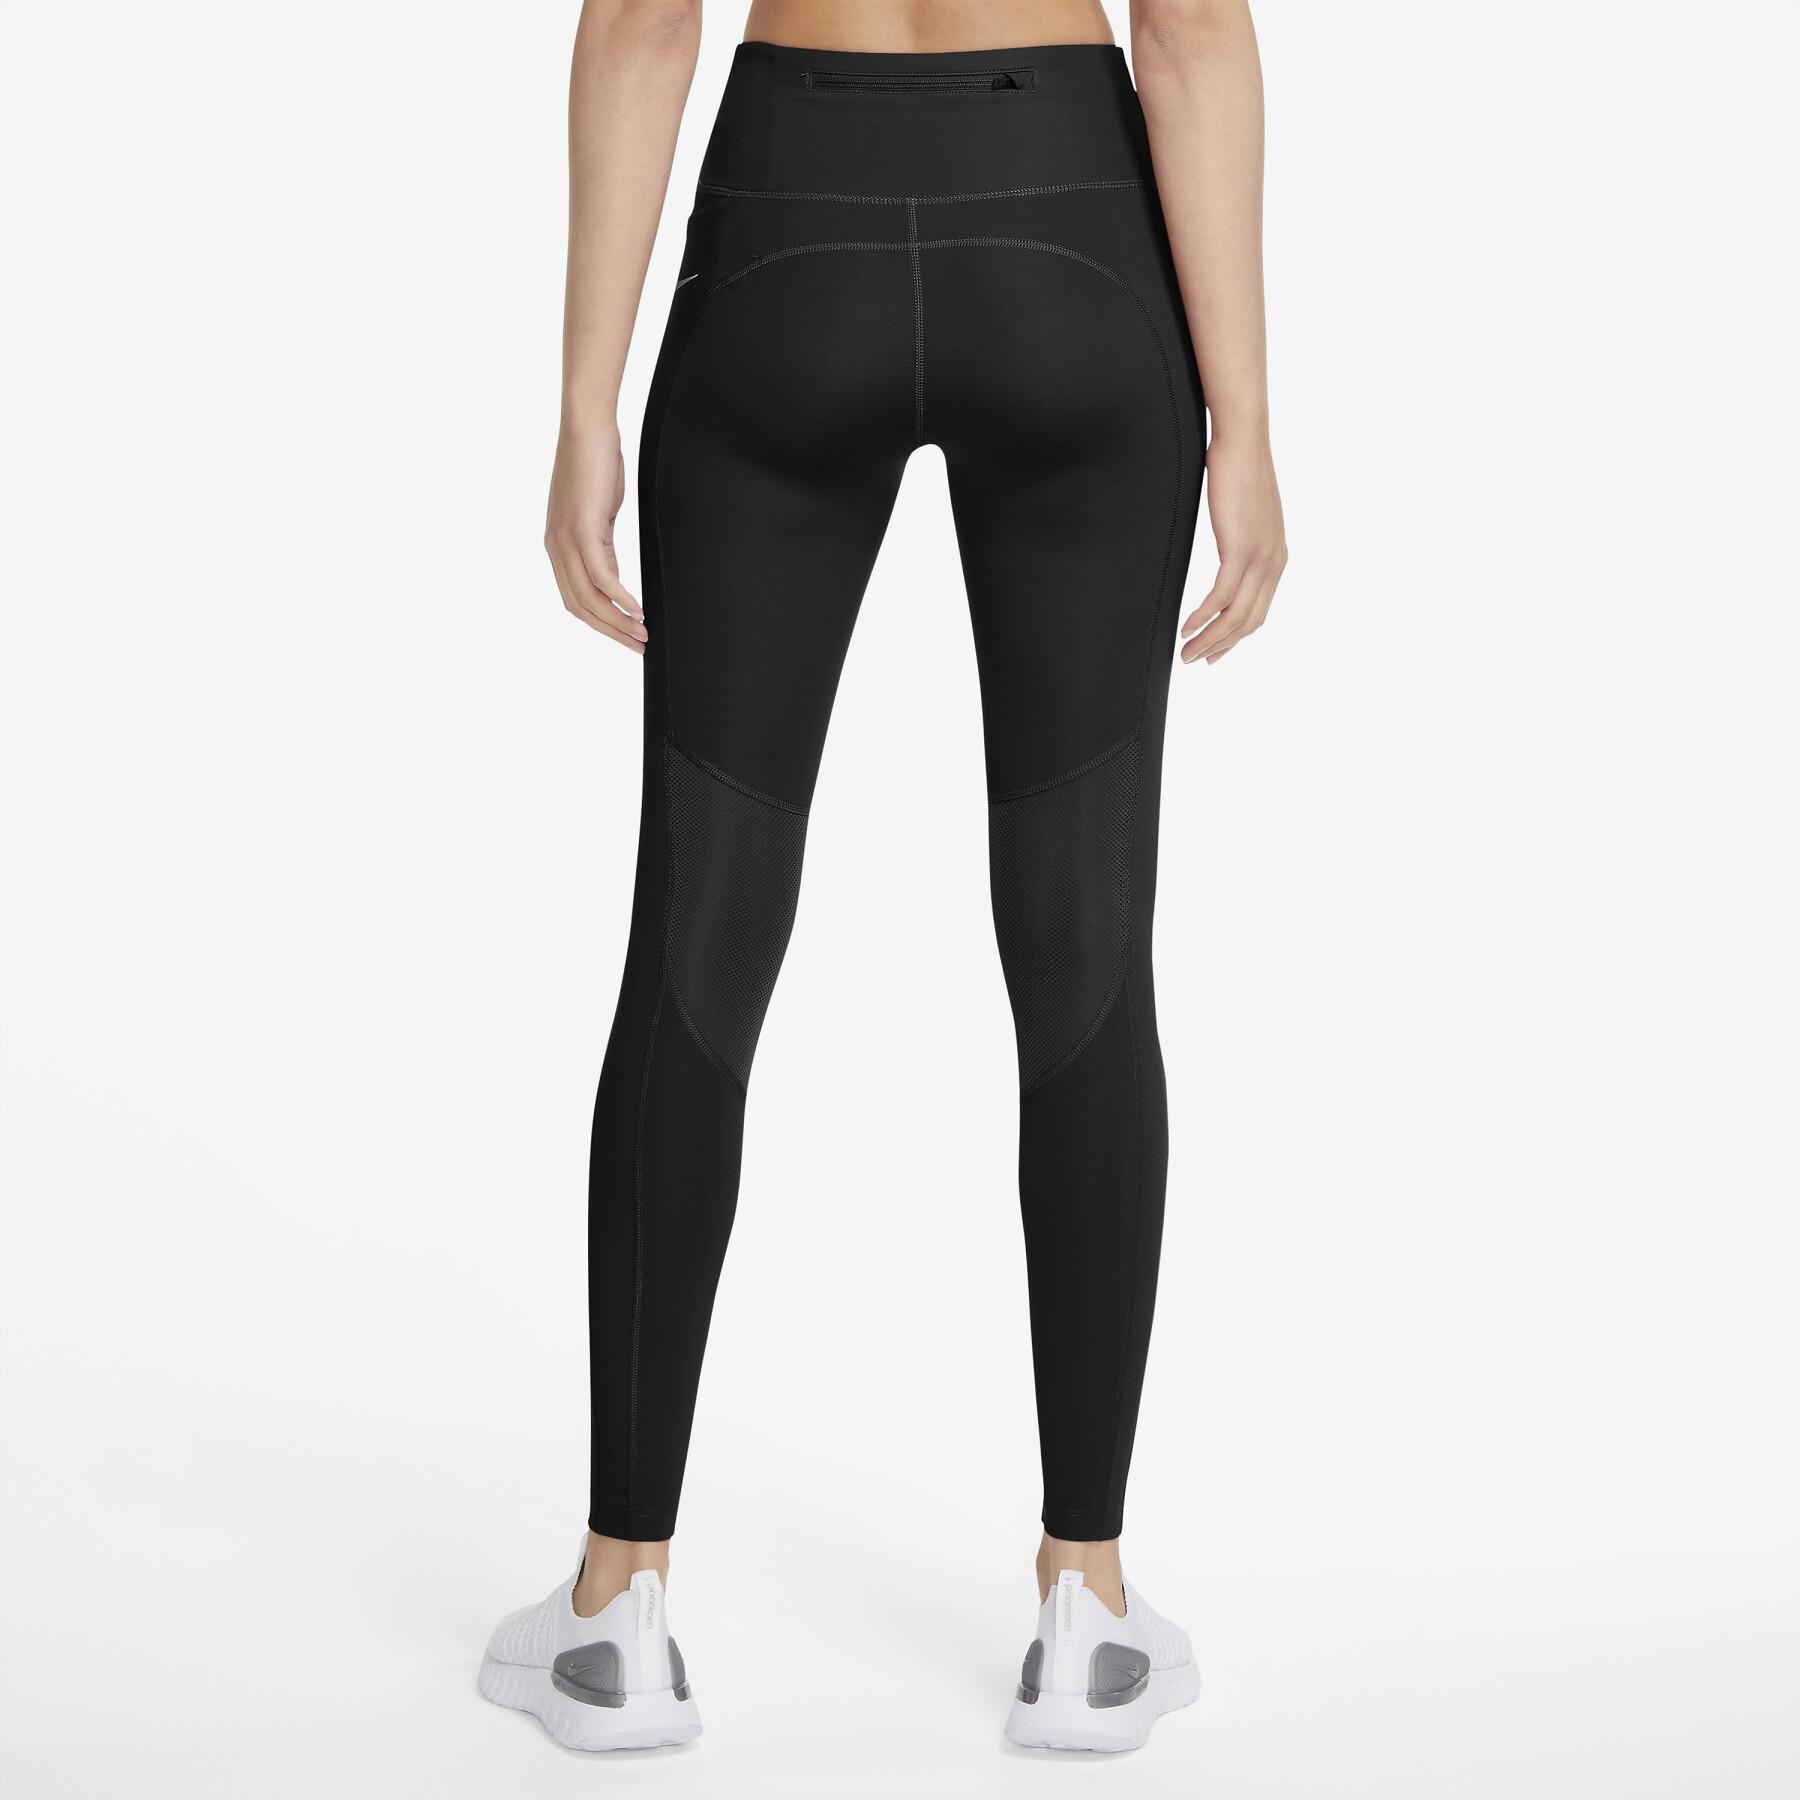 Women's trousers Nike Epic Fast